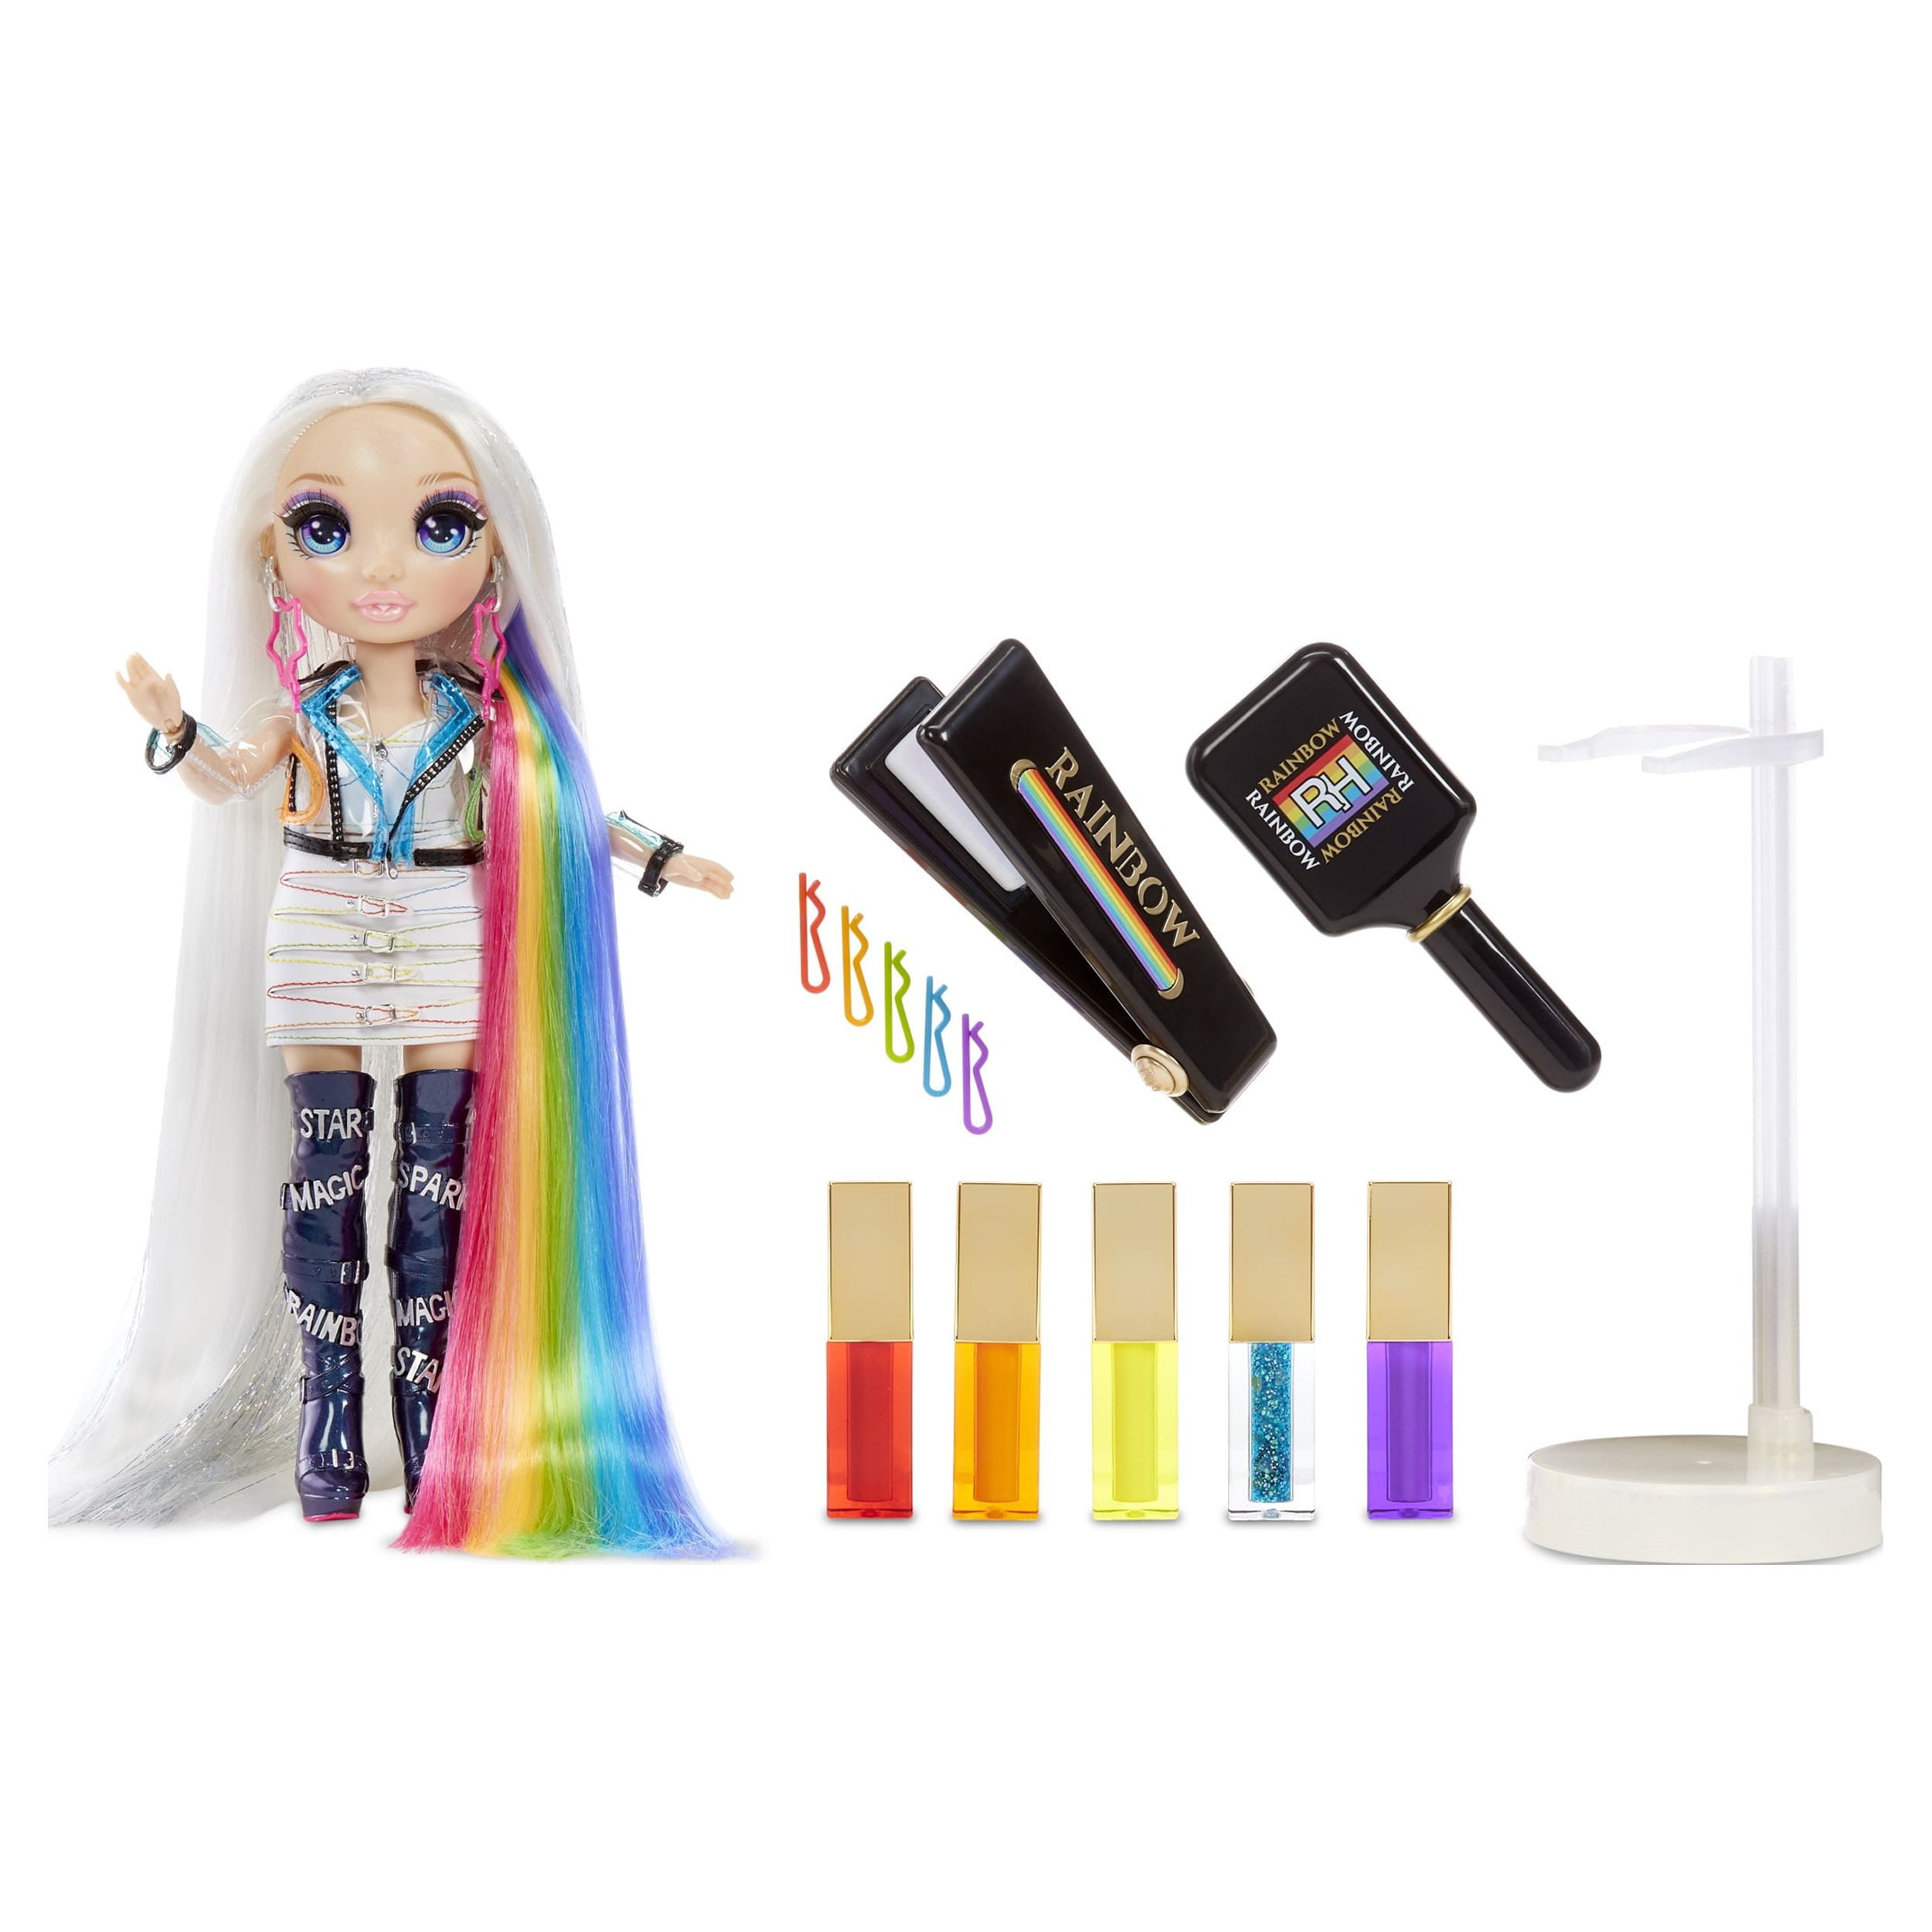 Rainbow high hair studio exclusive amaya raine fashion doll